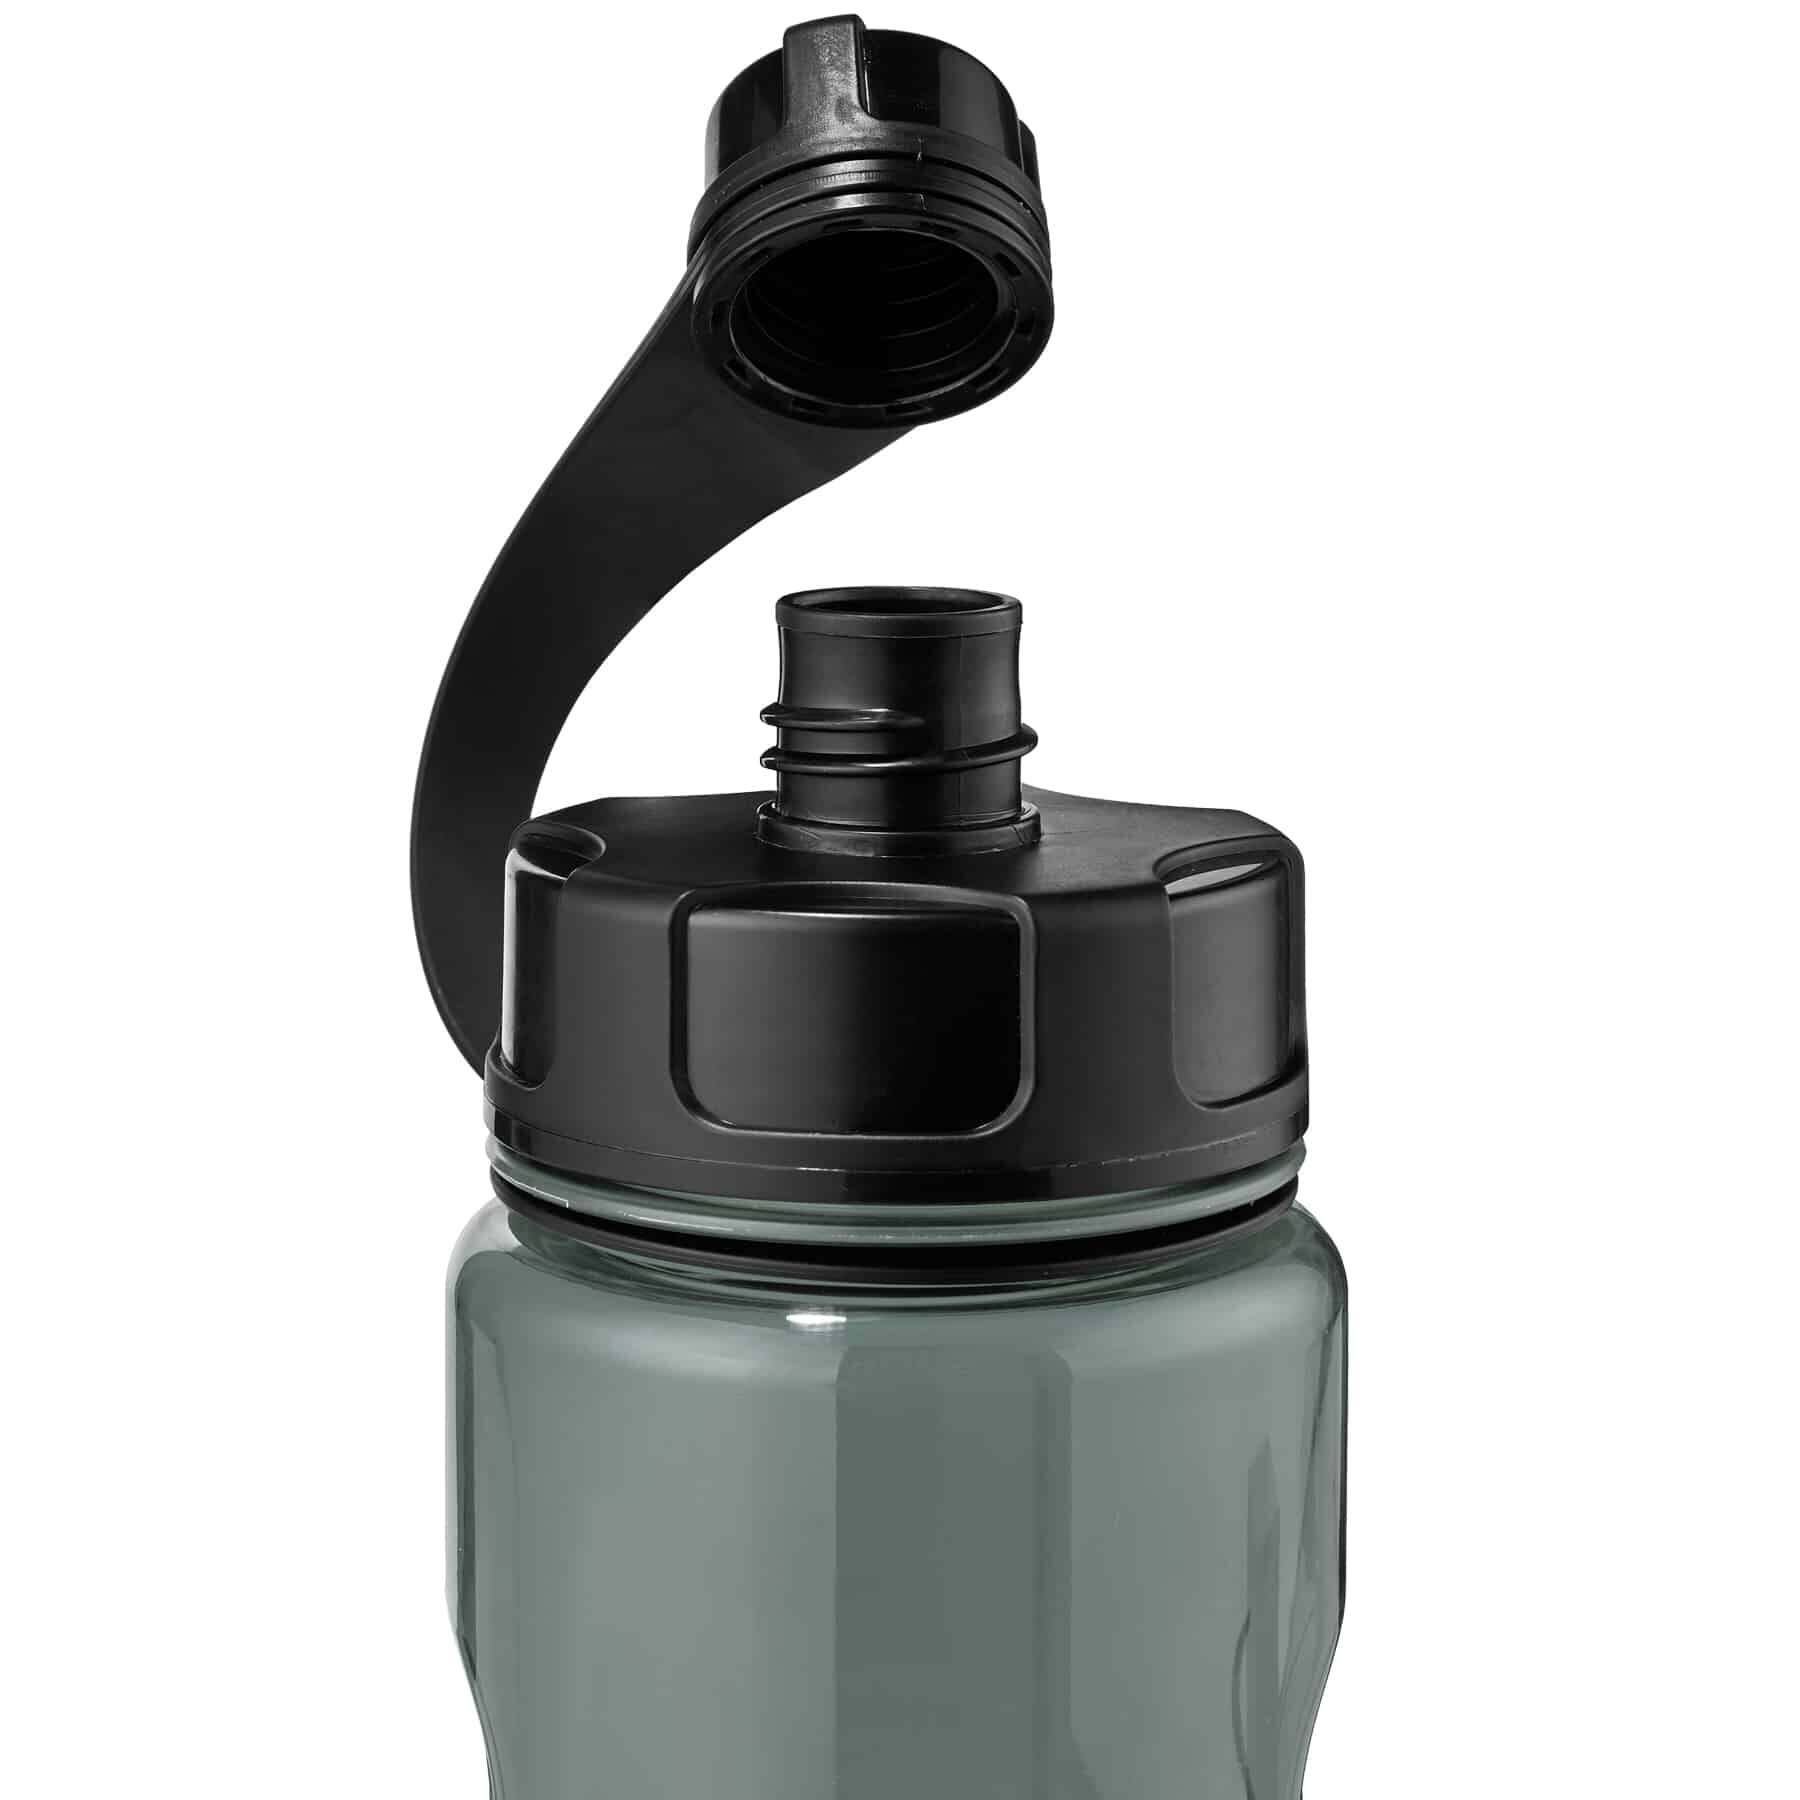 https://www.ergodyne.com/sites/default/files/product-images/13152-5151-wide-mouth-water-bottle-black-lid.jpg